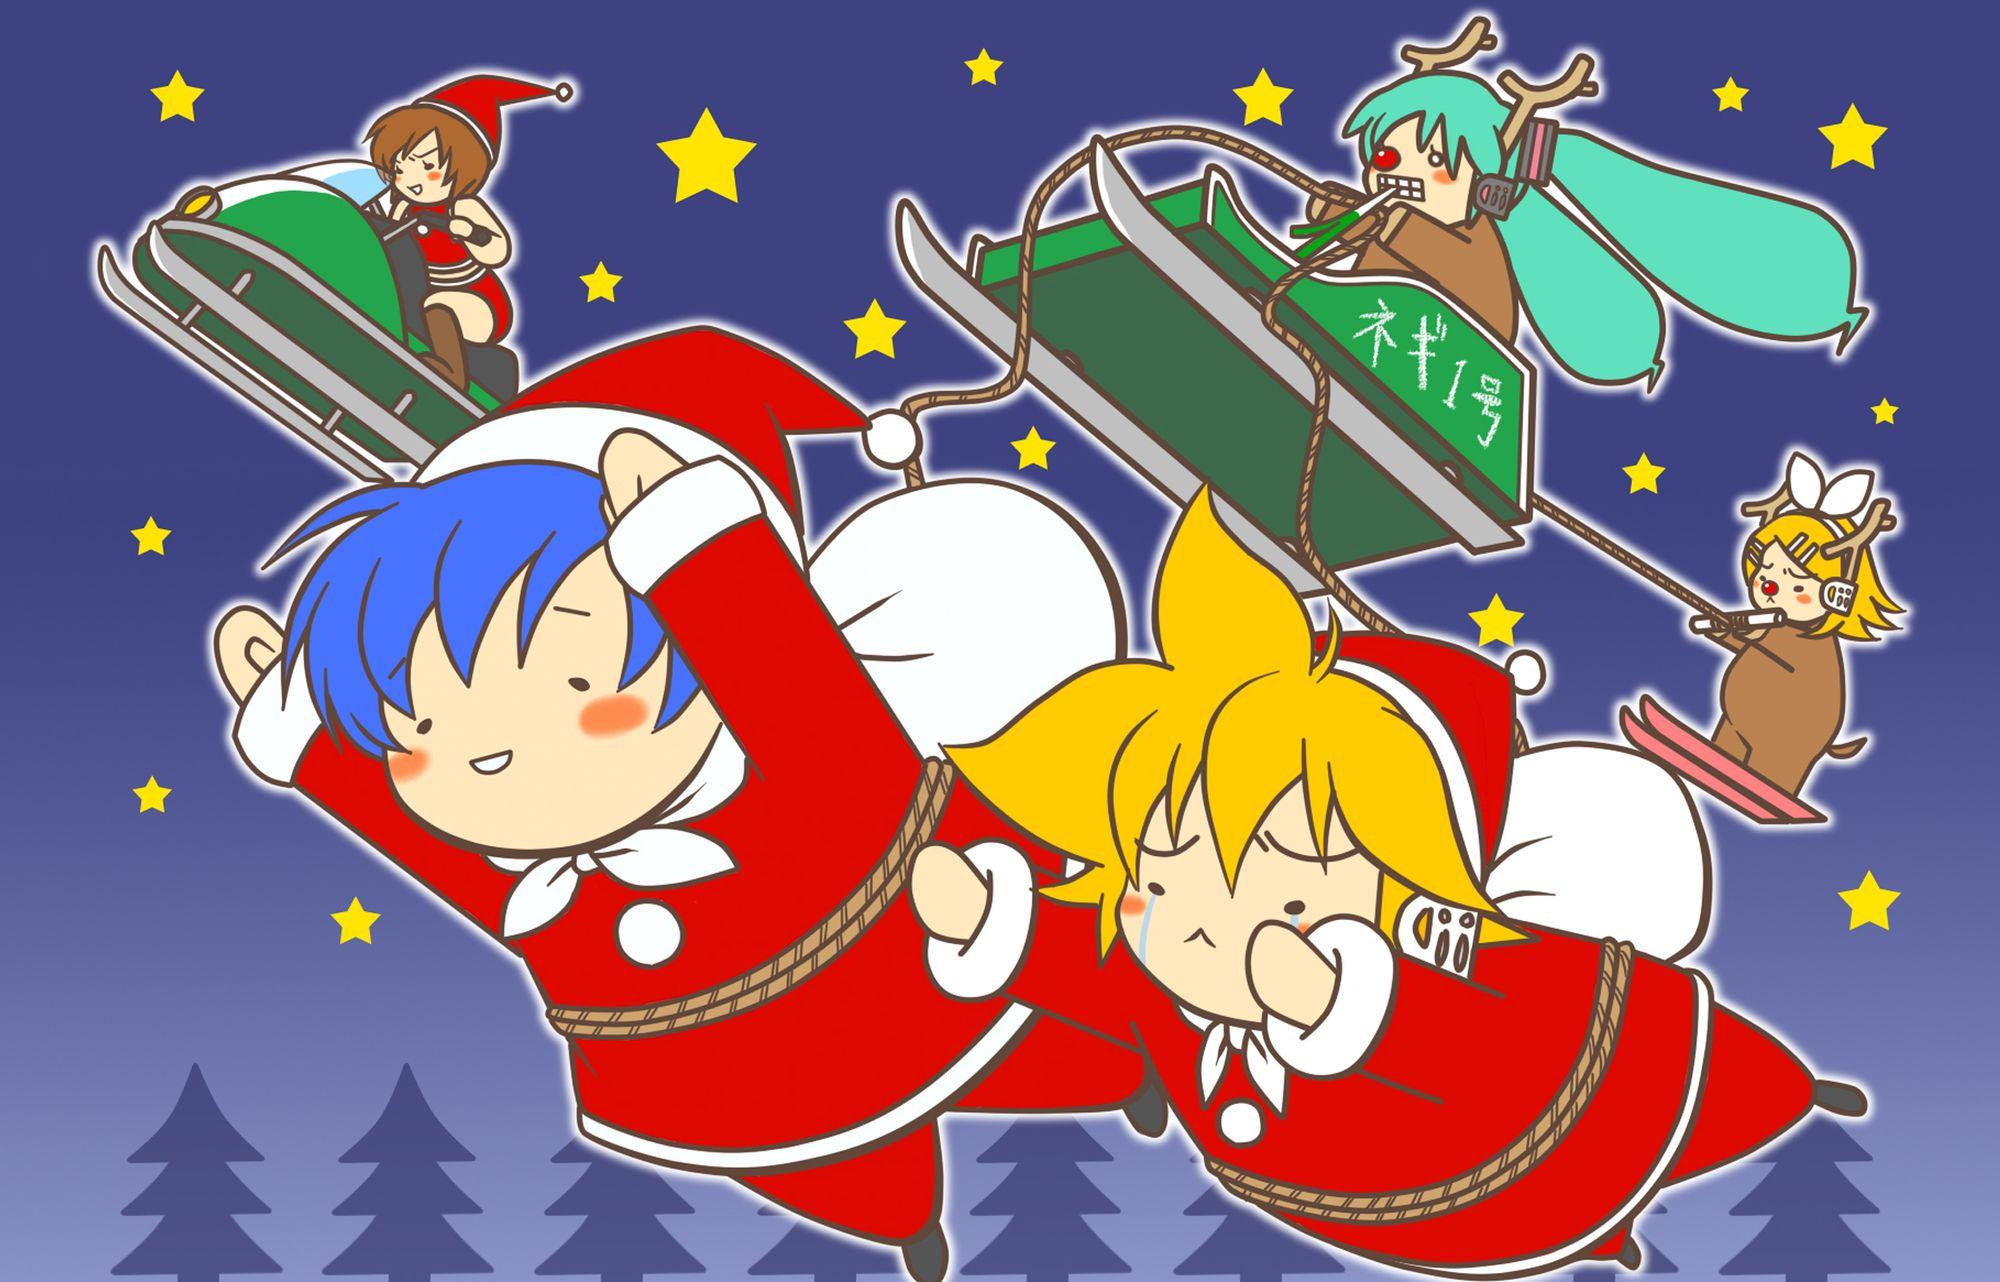 Anime Christmas Wallpaper 2015 (Version 2) by NekoTheOtaku on DeviantArt